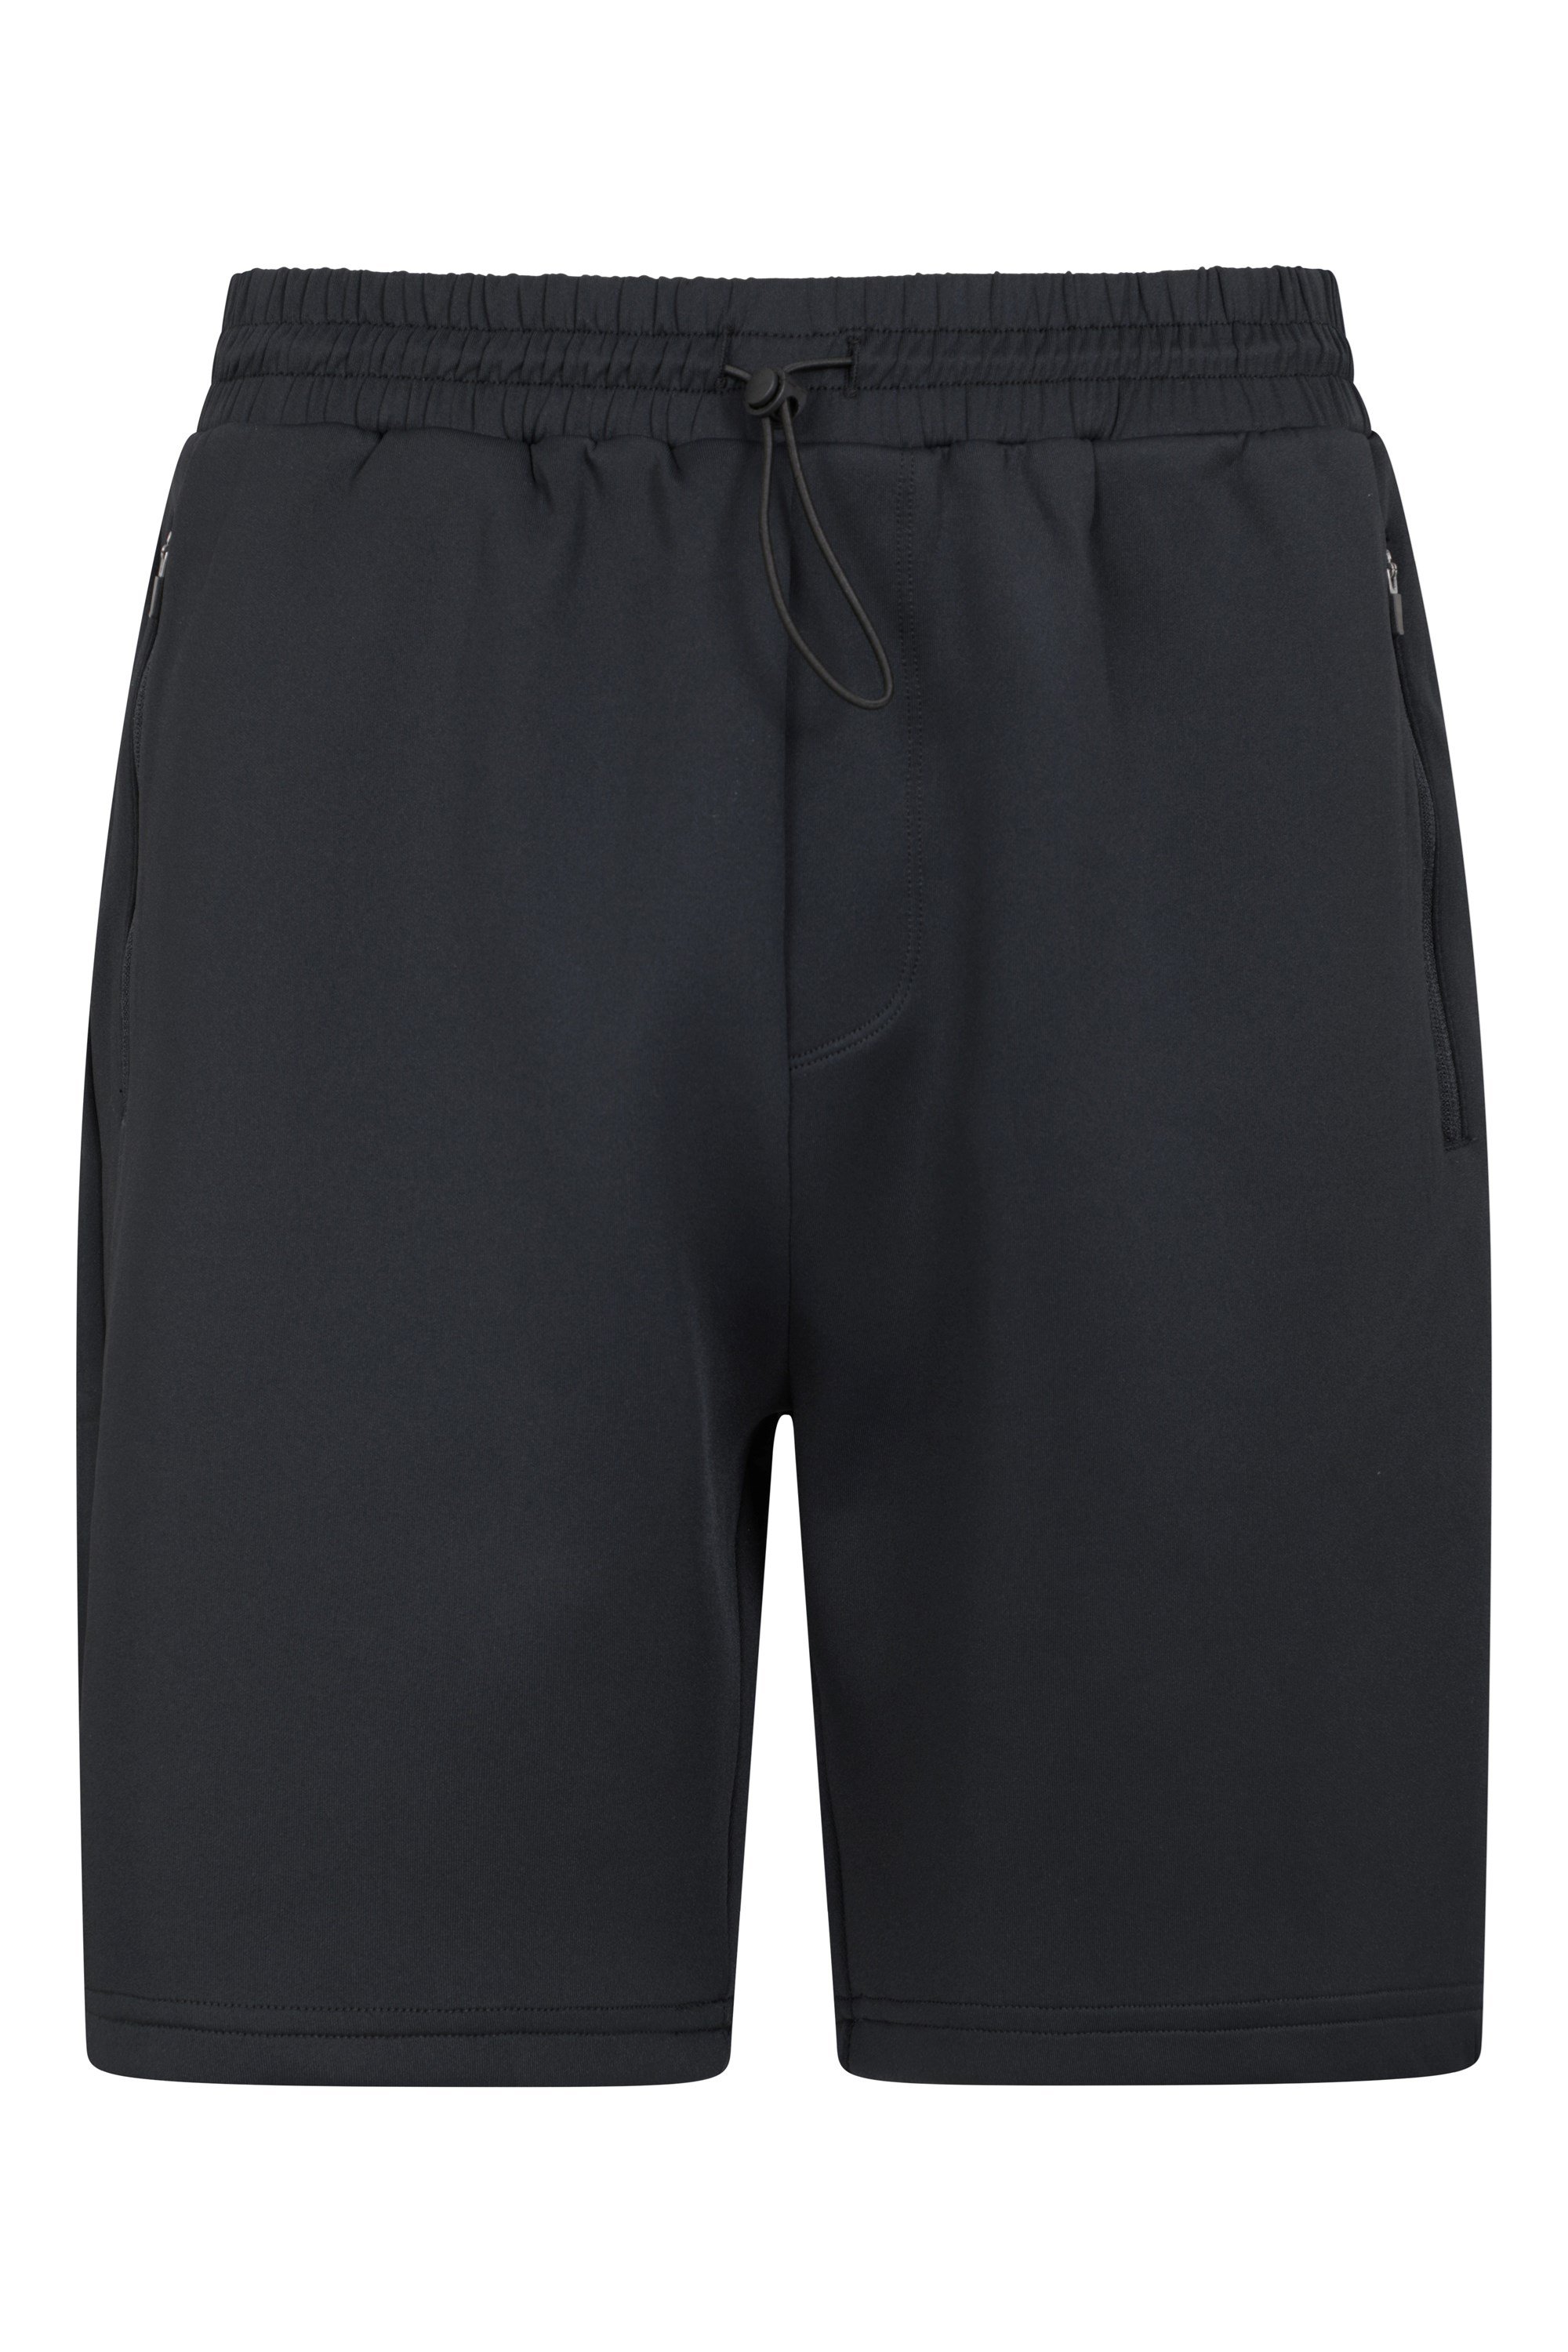 Dispatch Mens Neoprene Active Shorts | Mountain Warehouse GB